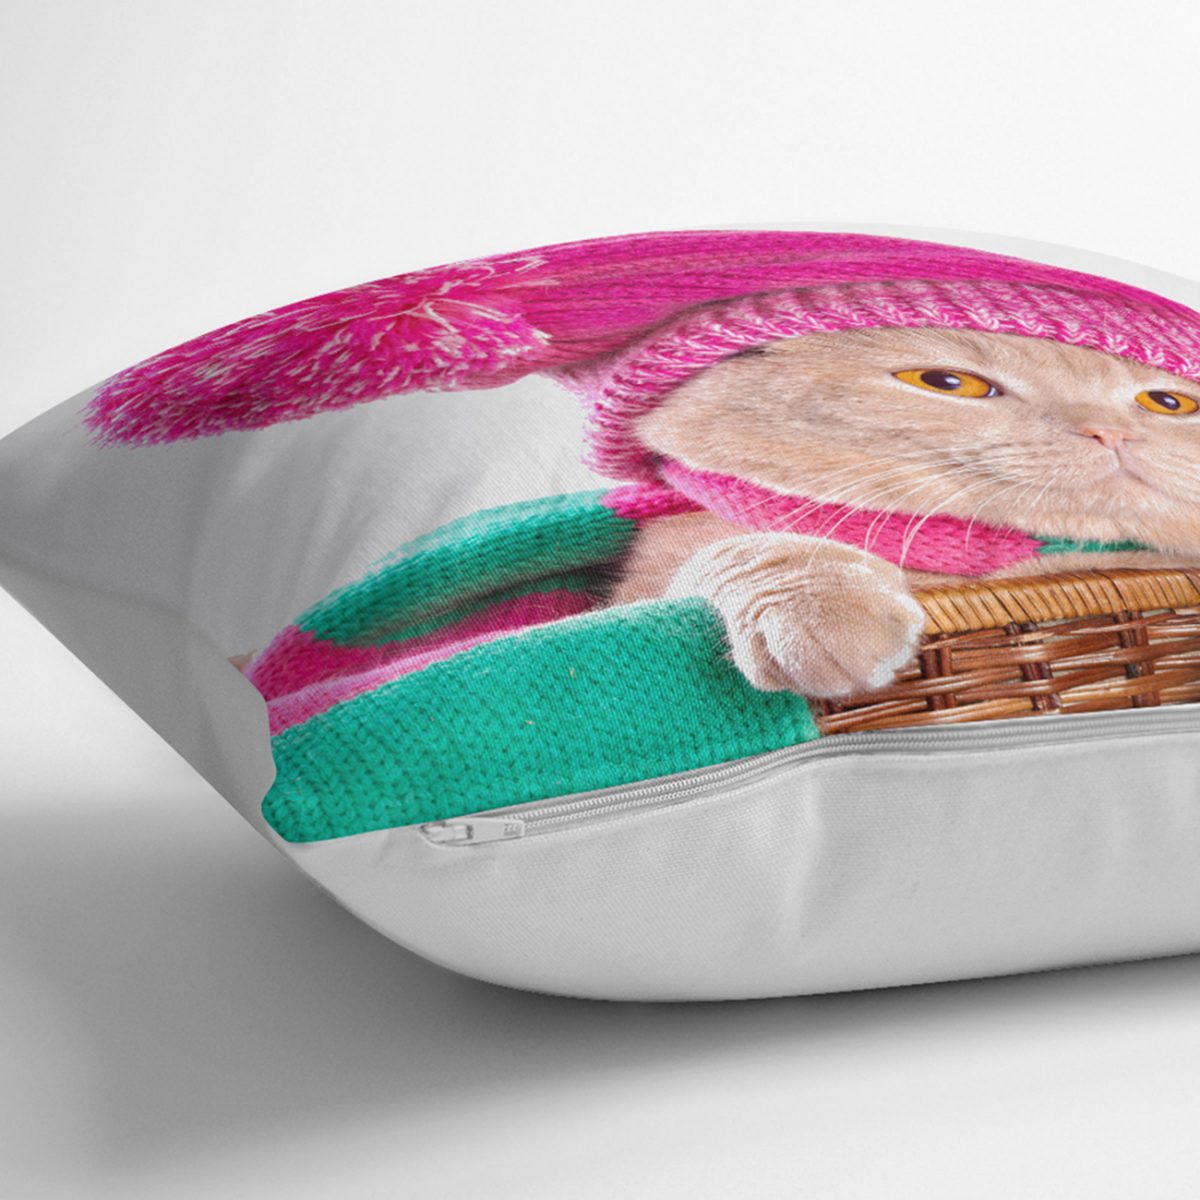 Sepet İçinde Pembe Şapkalı Sevimli Kedicik Dekoratif Kırlent Kılıfı Realhomes